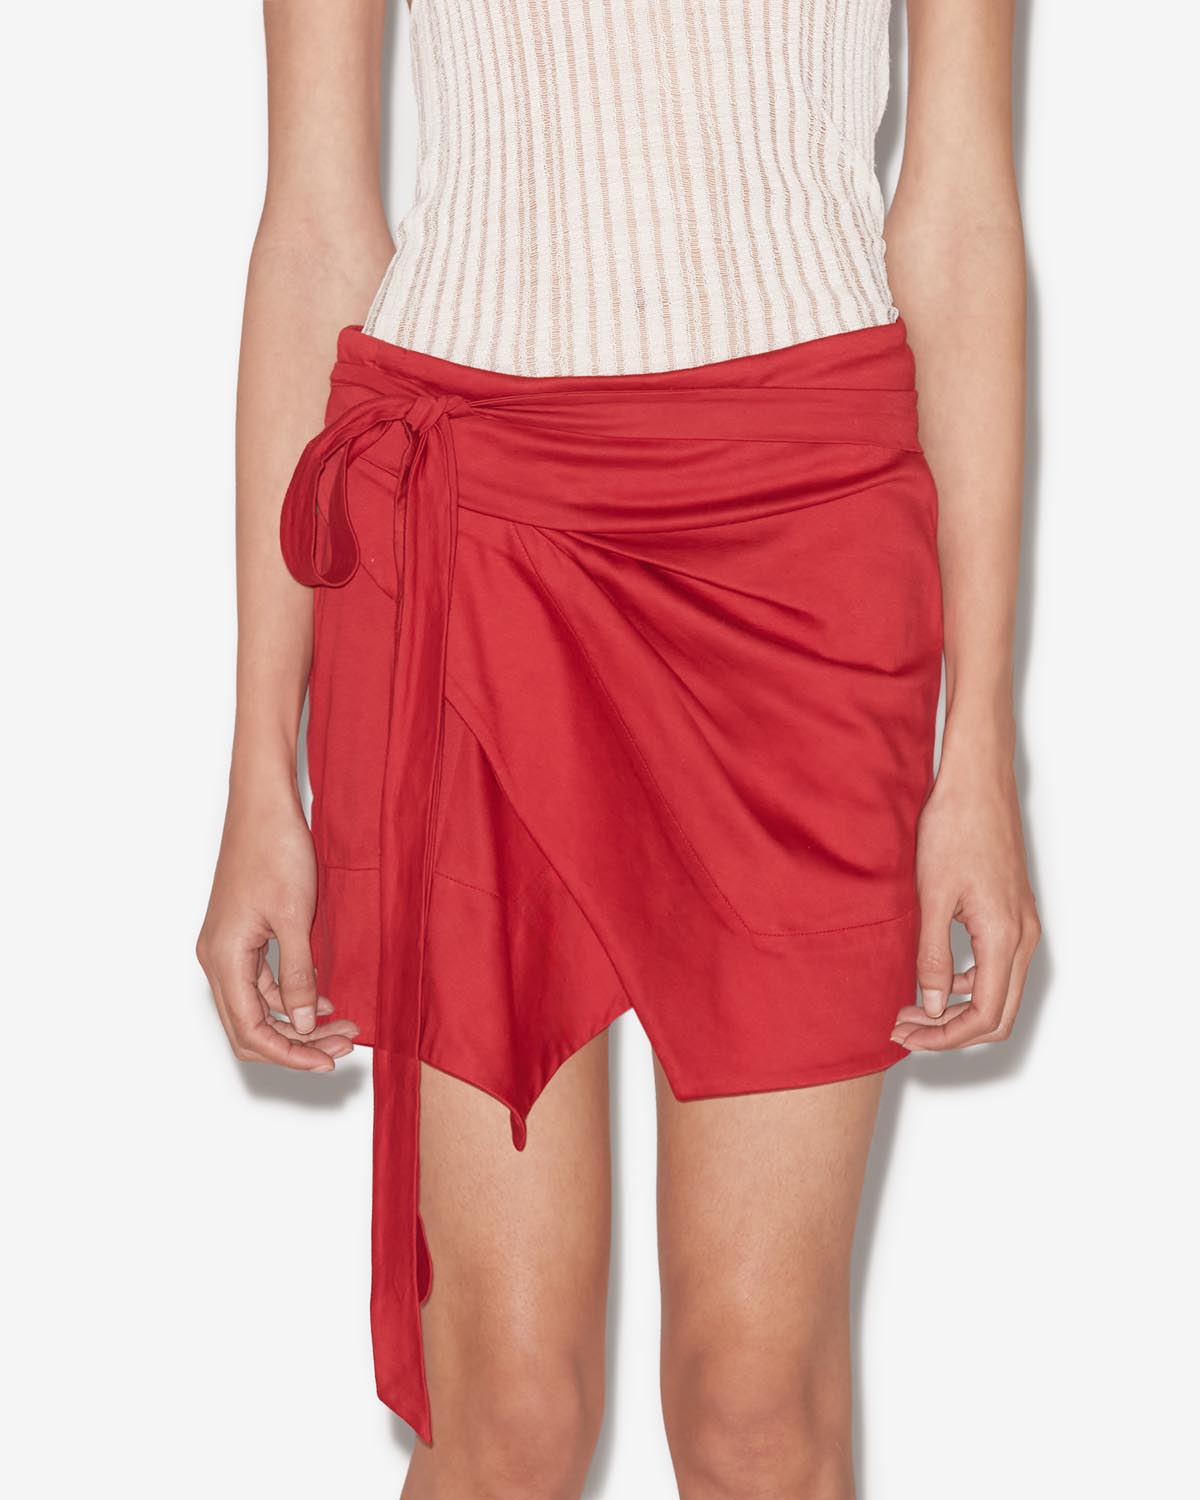 Berenice skirt Woman Scarlet red 5